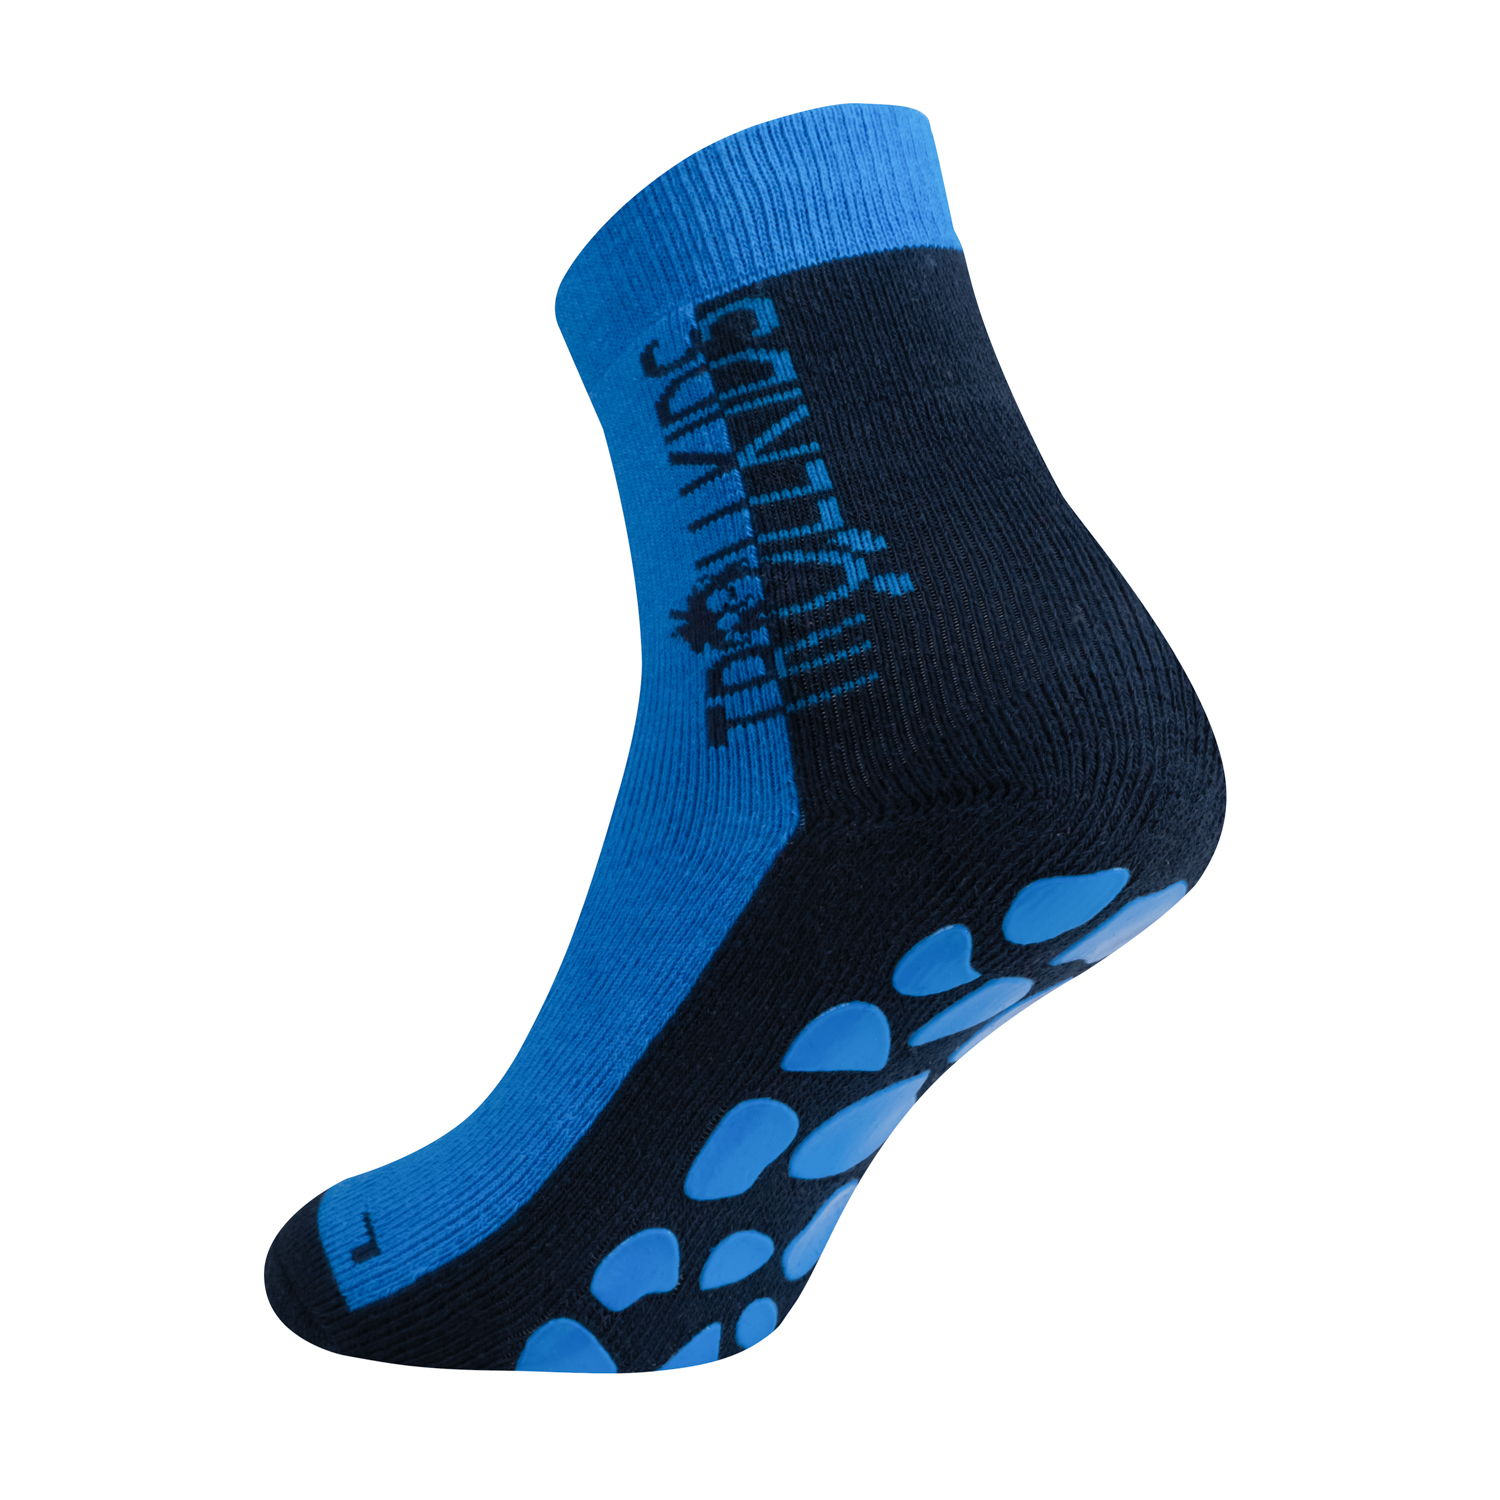 Trollkids Anti Slip Socks navy/medium blue